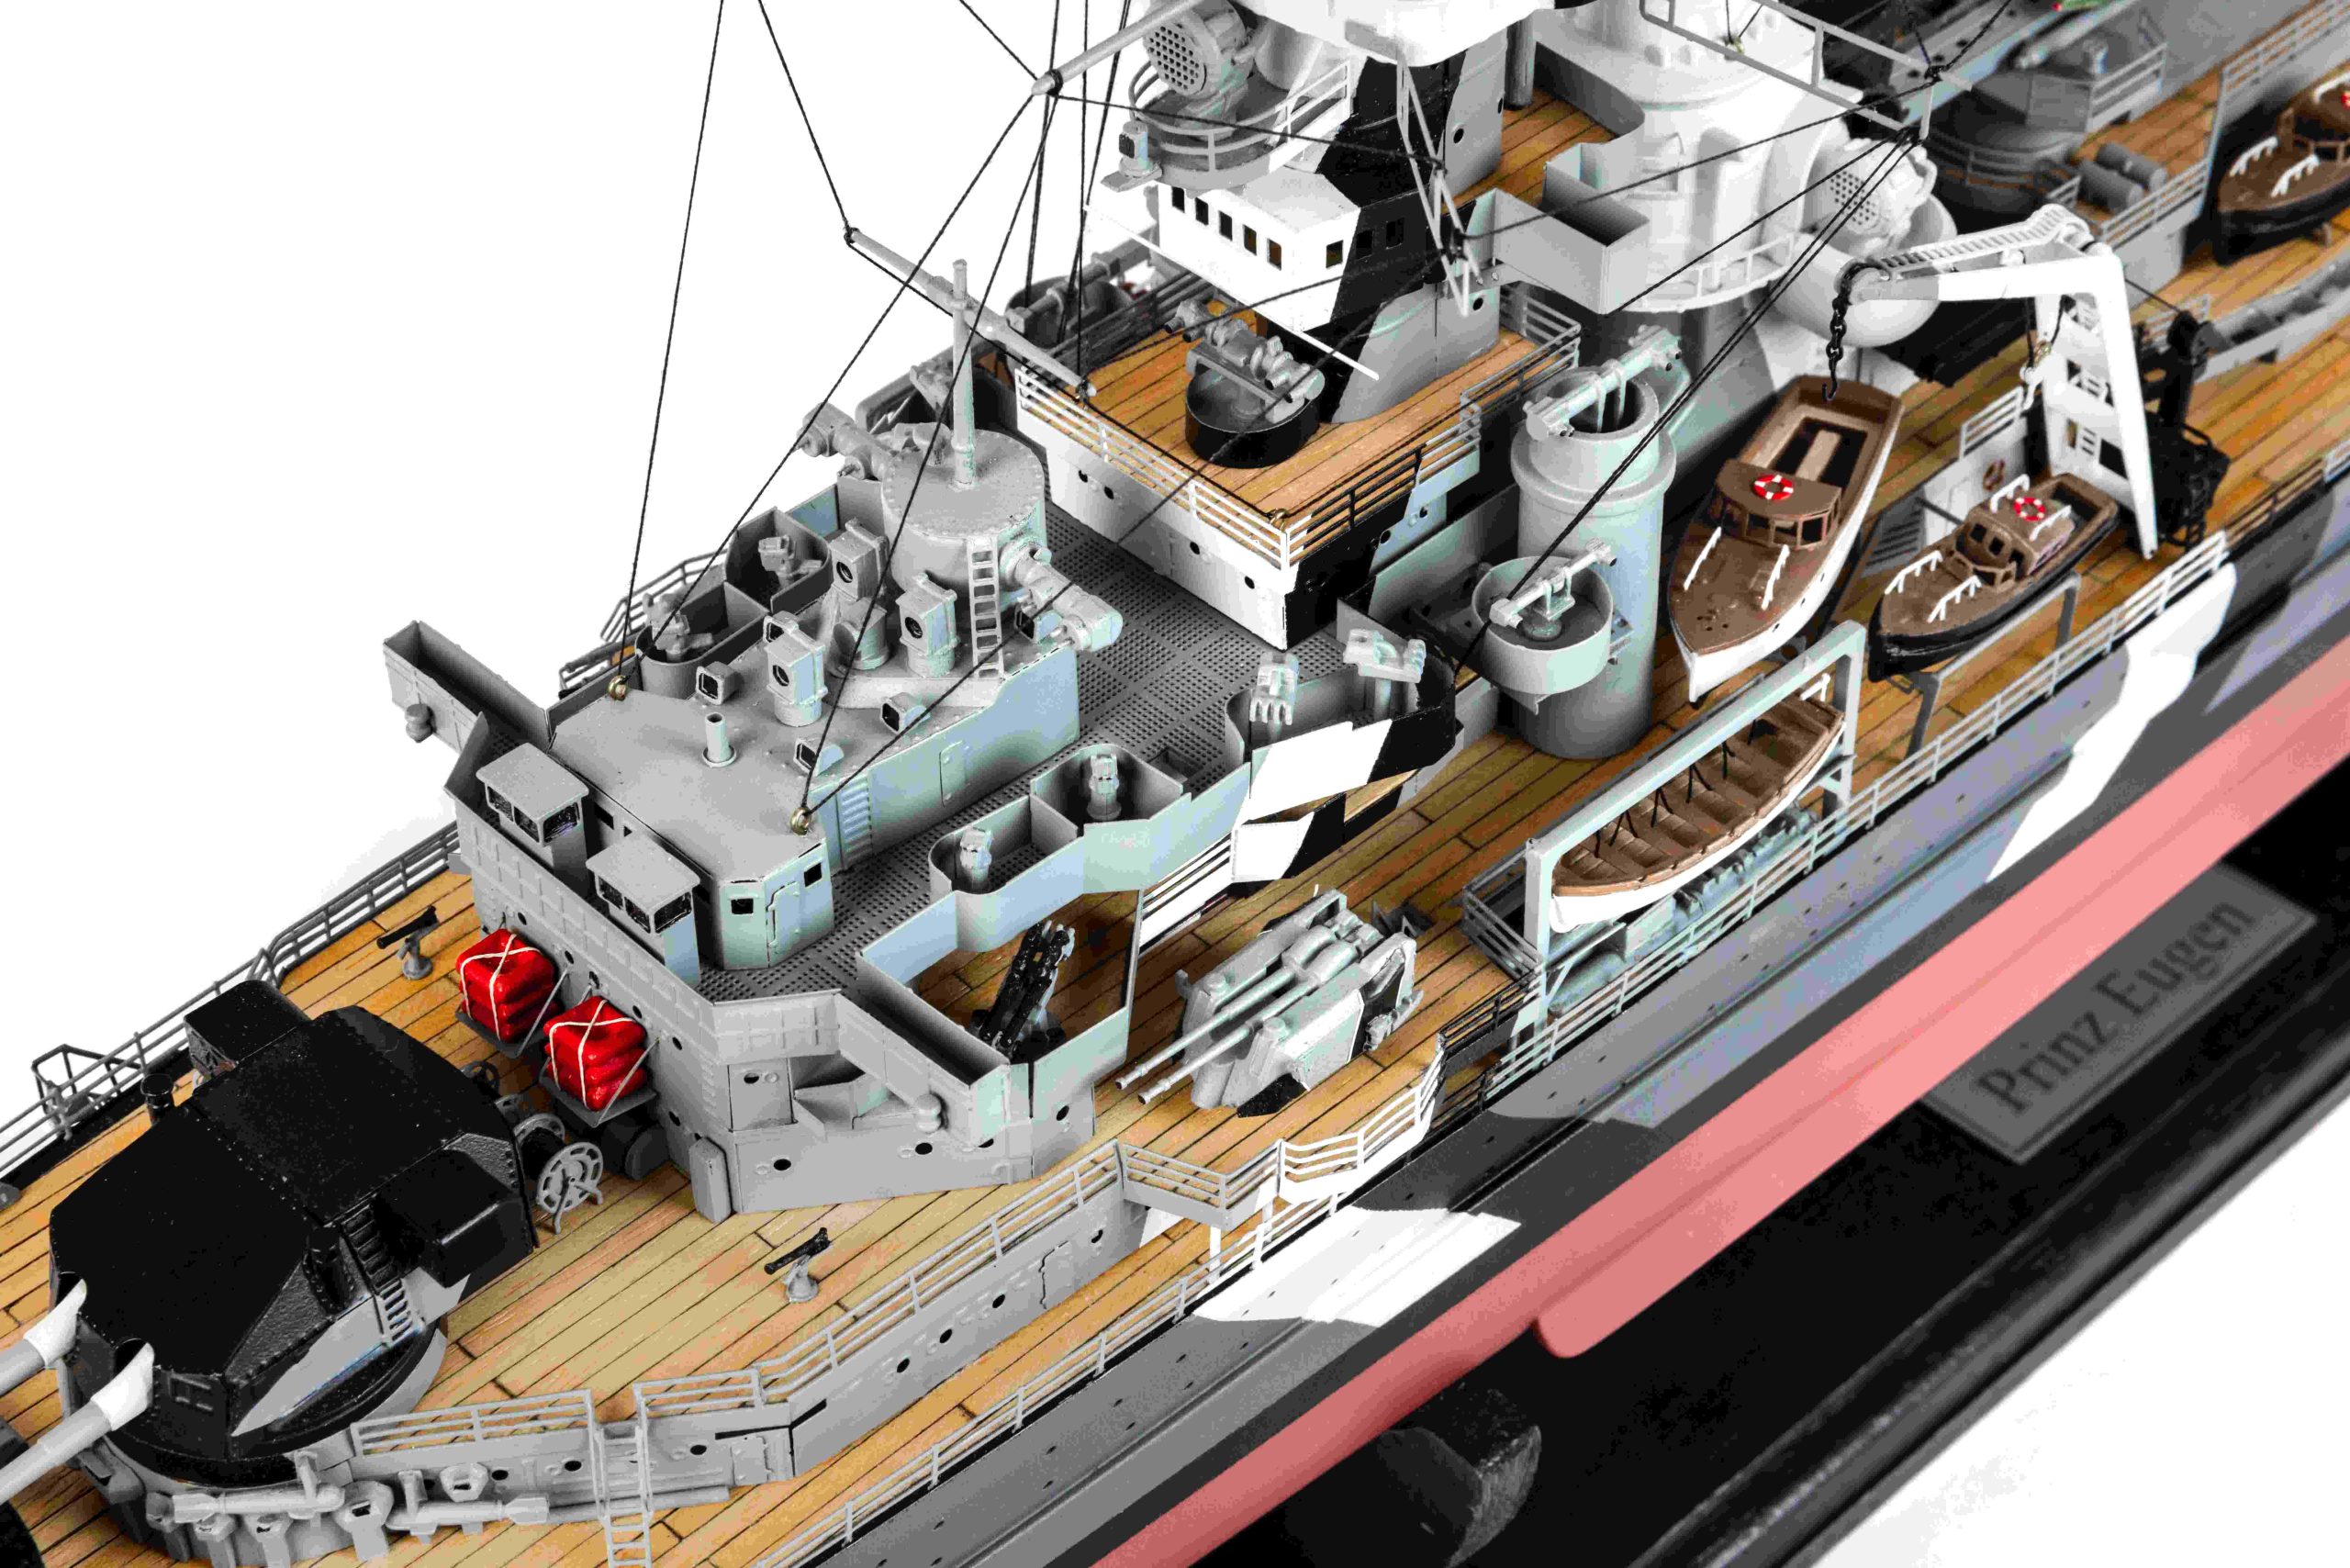 PRINZ EUGEN Model Boat Kit - Occre (16000)